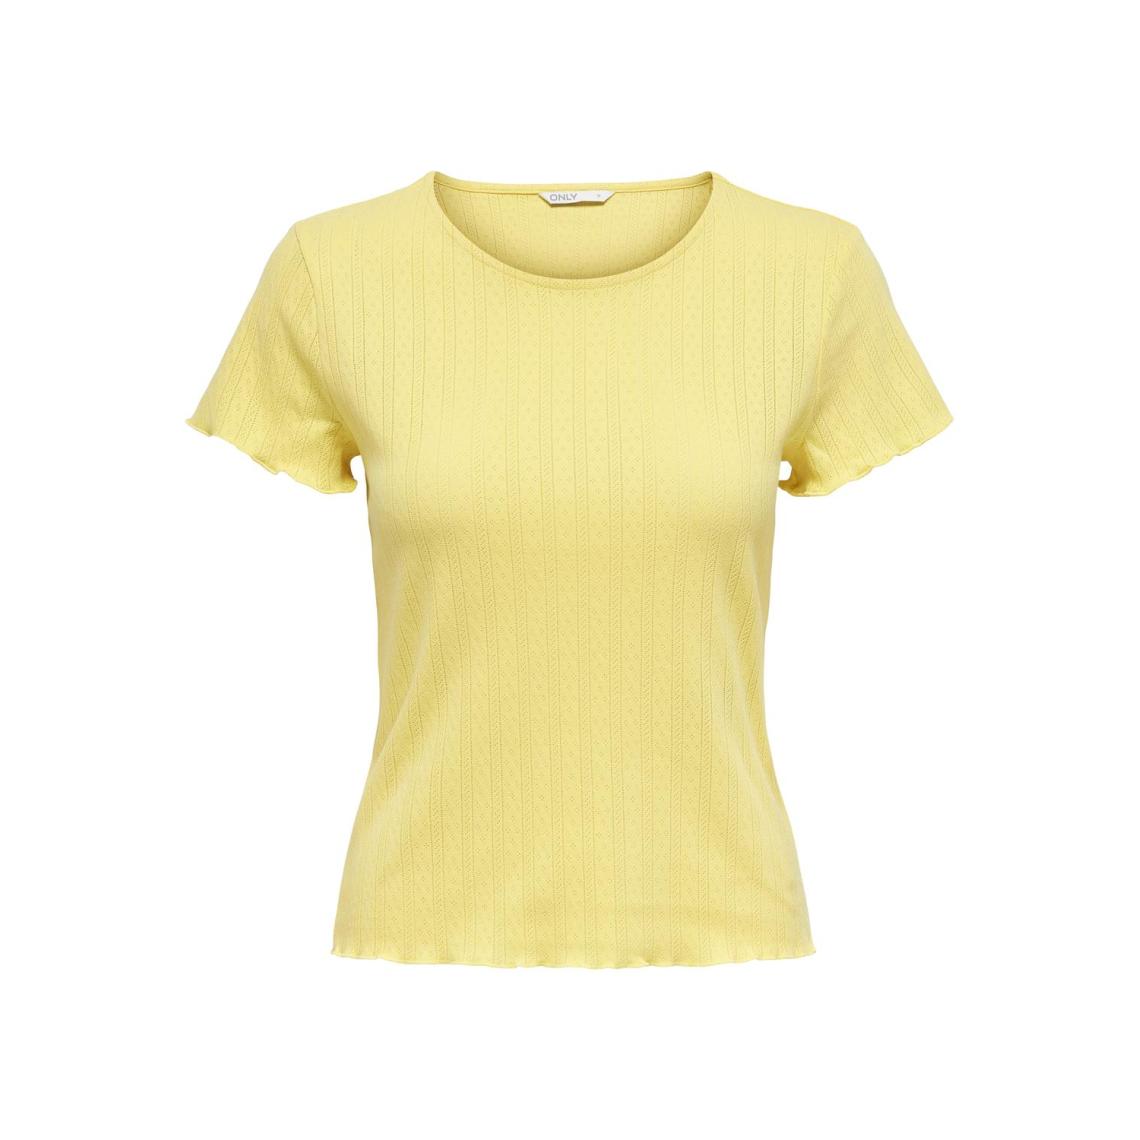 T-shirt tight fit col rond manches courtes jaune en coton Alice